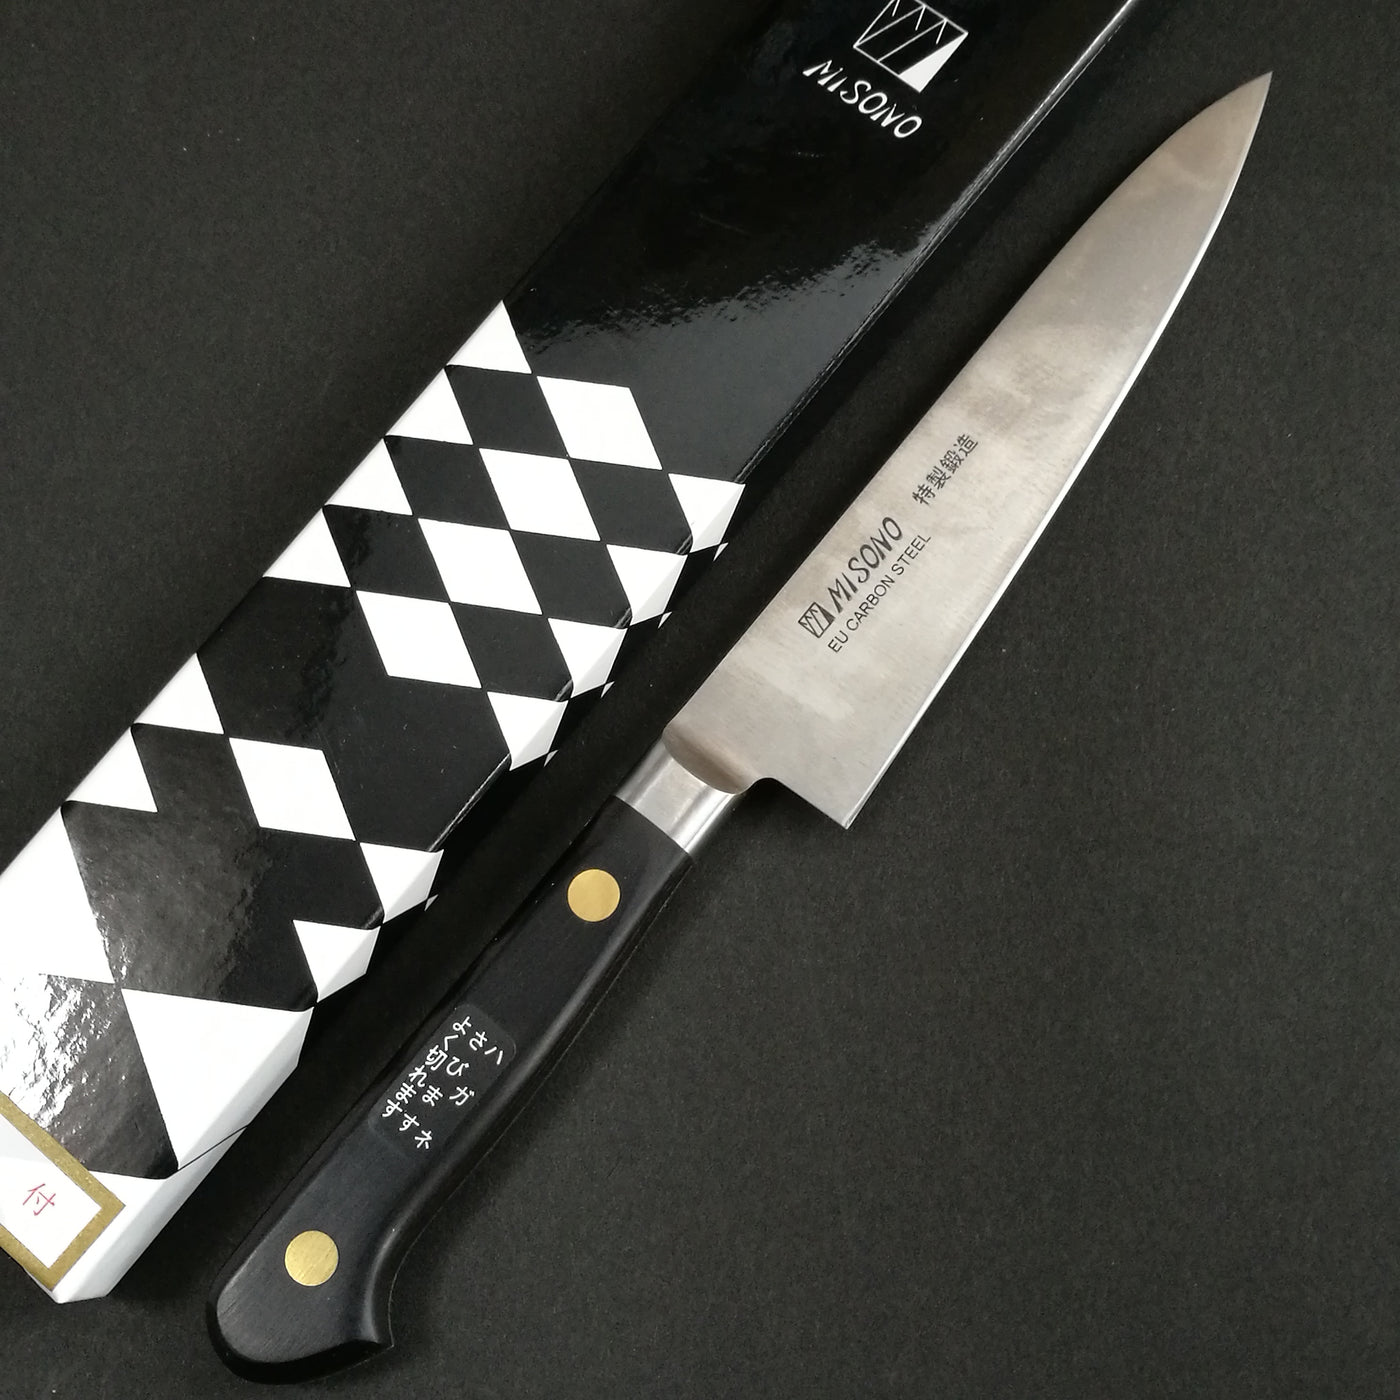 Misono EU Swedish Carbon Steel Gyuto Knife